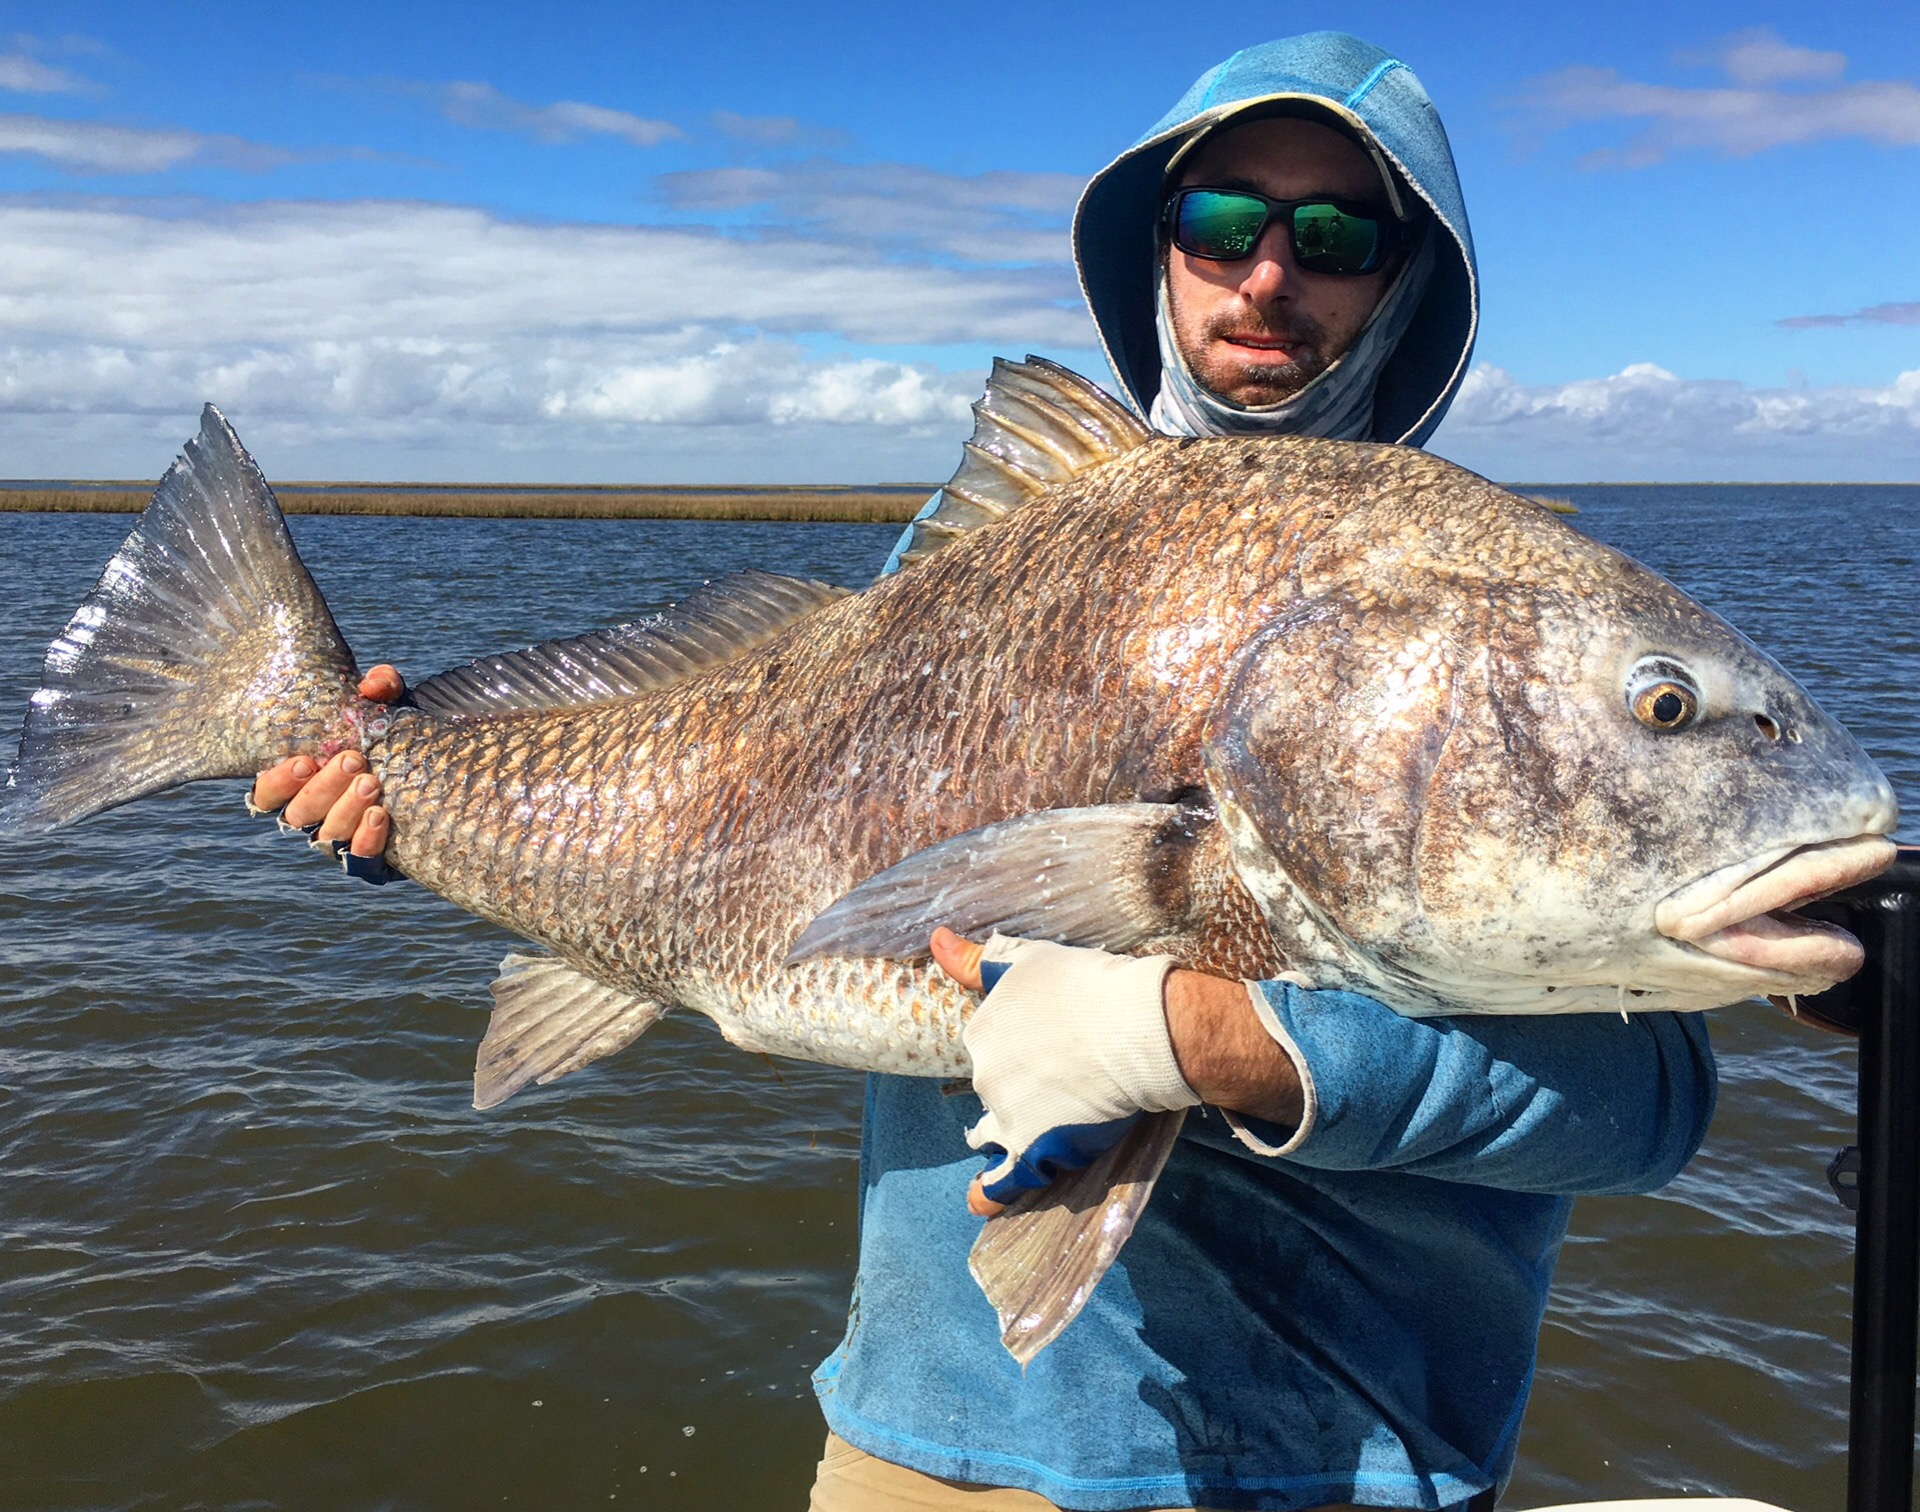 Man displays a huge fish captured during a trip